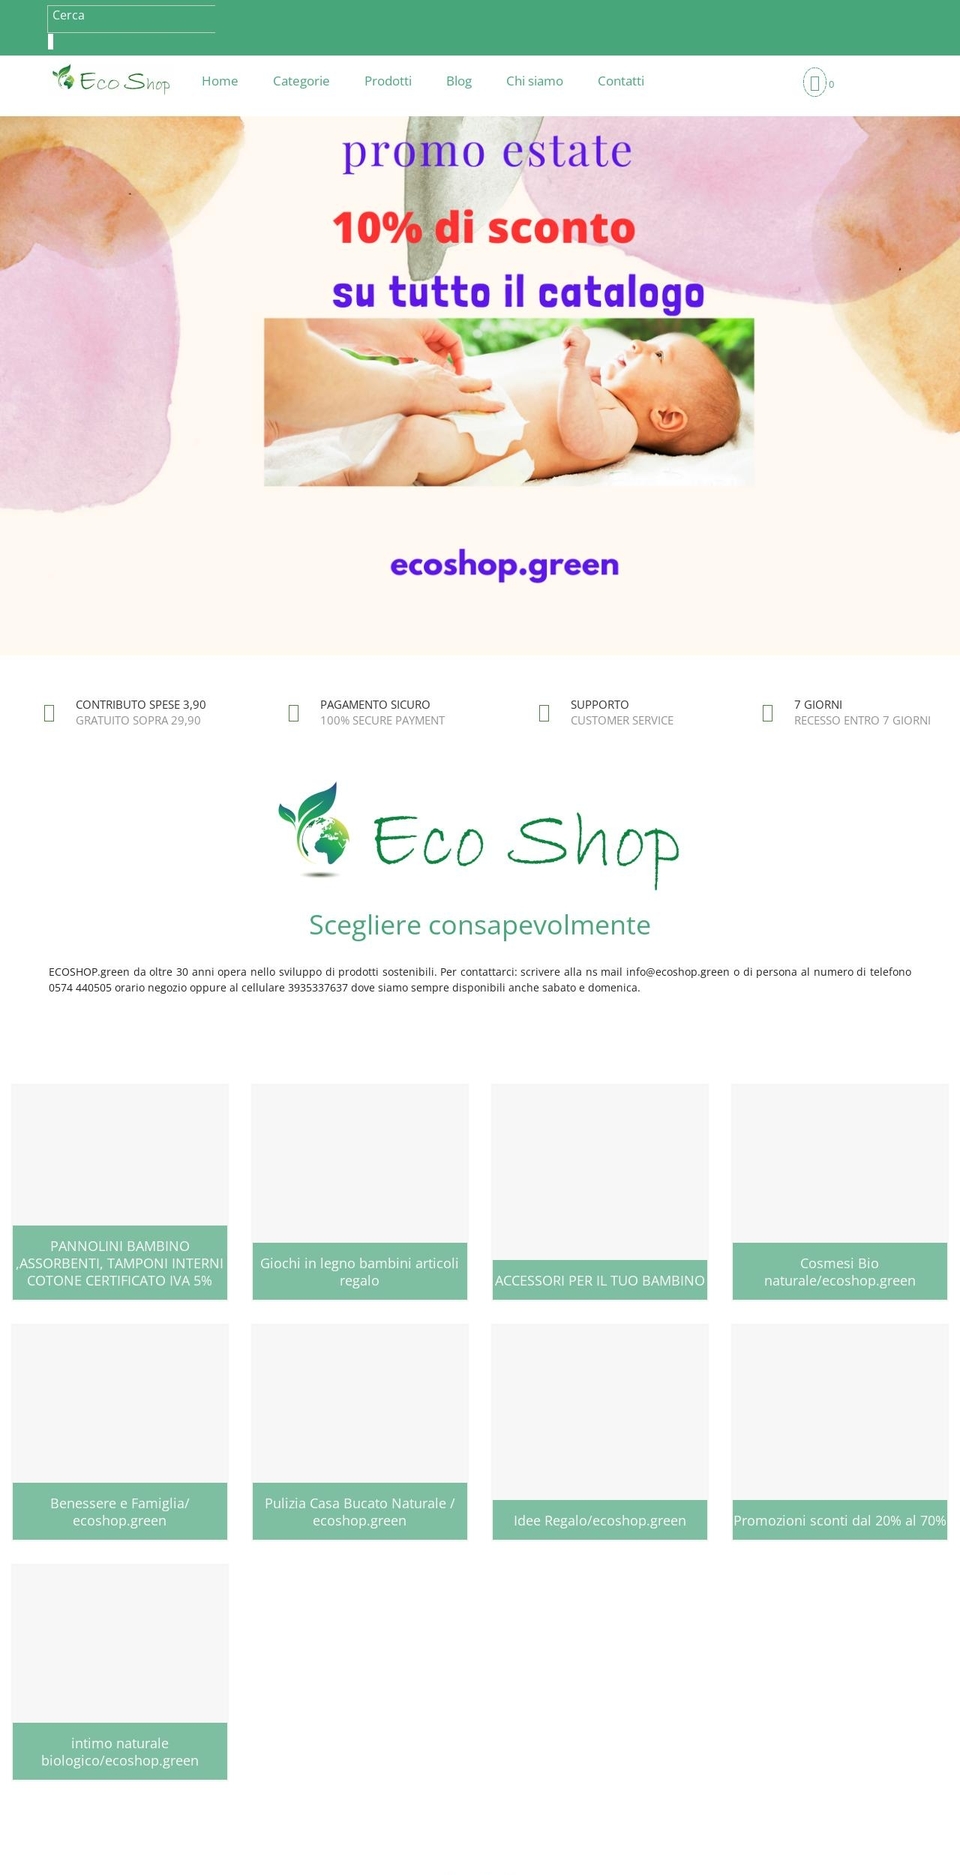 ecoshop.green shopify website screenshot